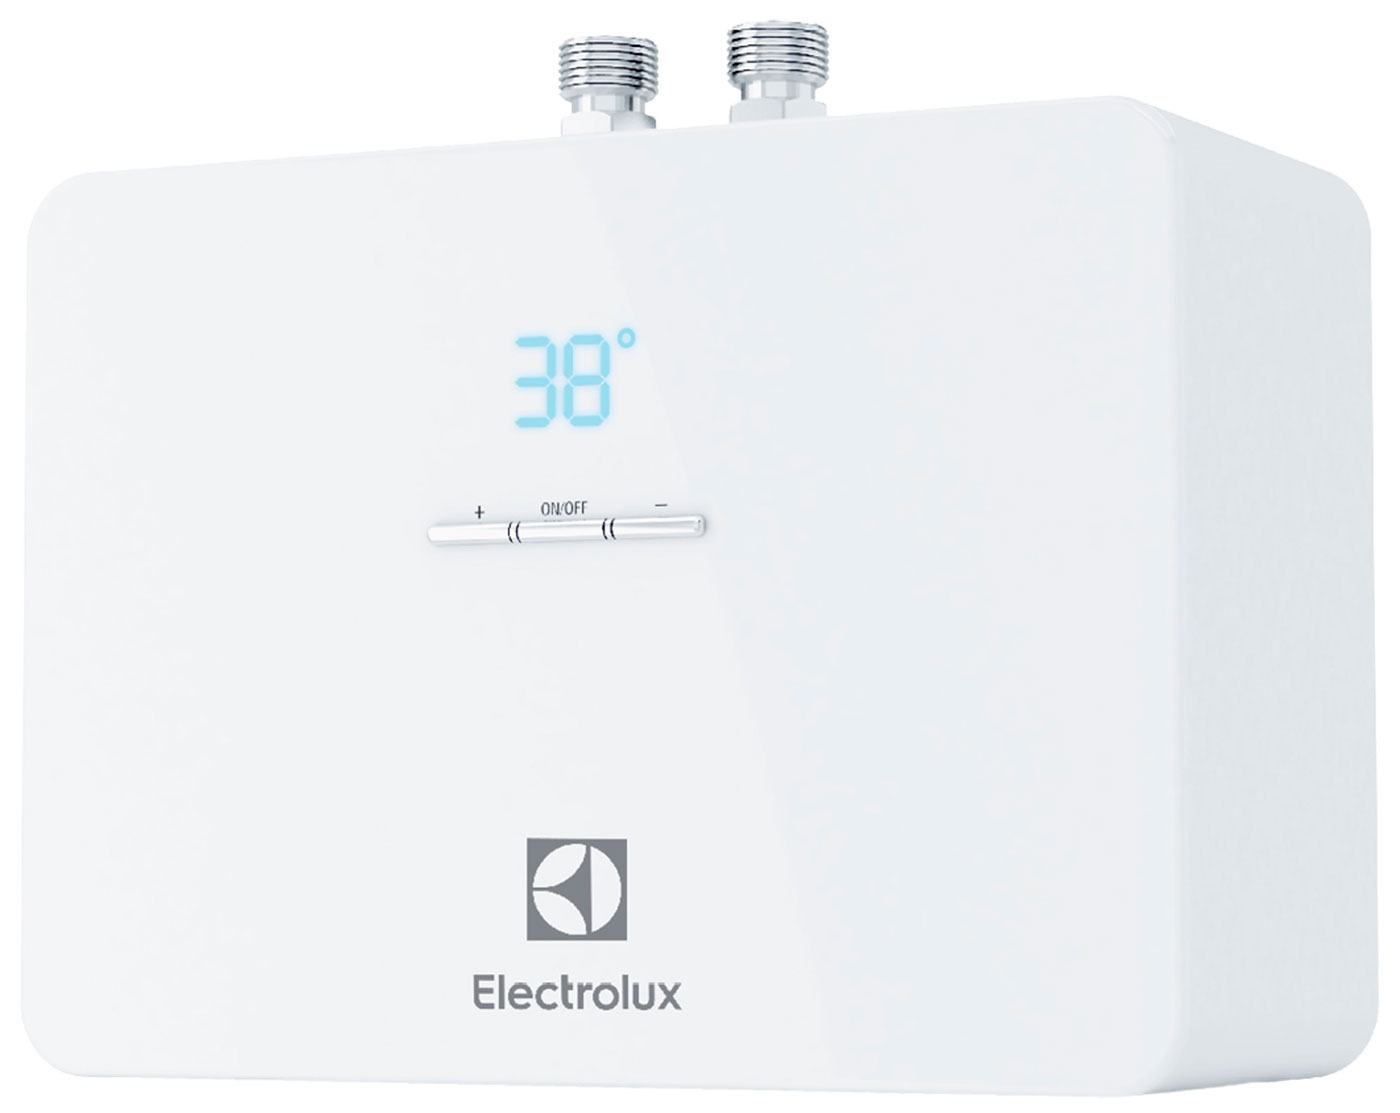 Electrolux aquatronic digital 6